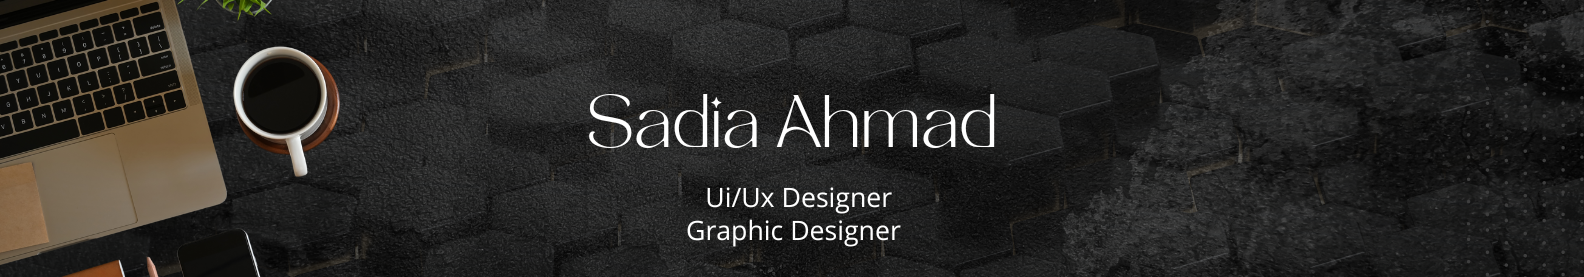 Sadia Ahmad's profile banner